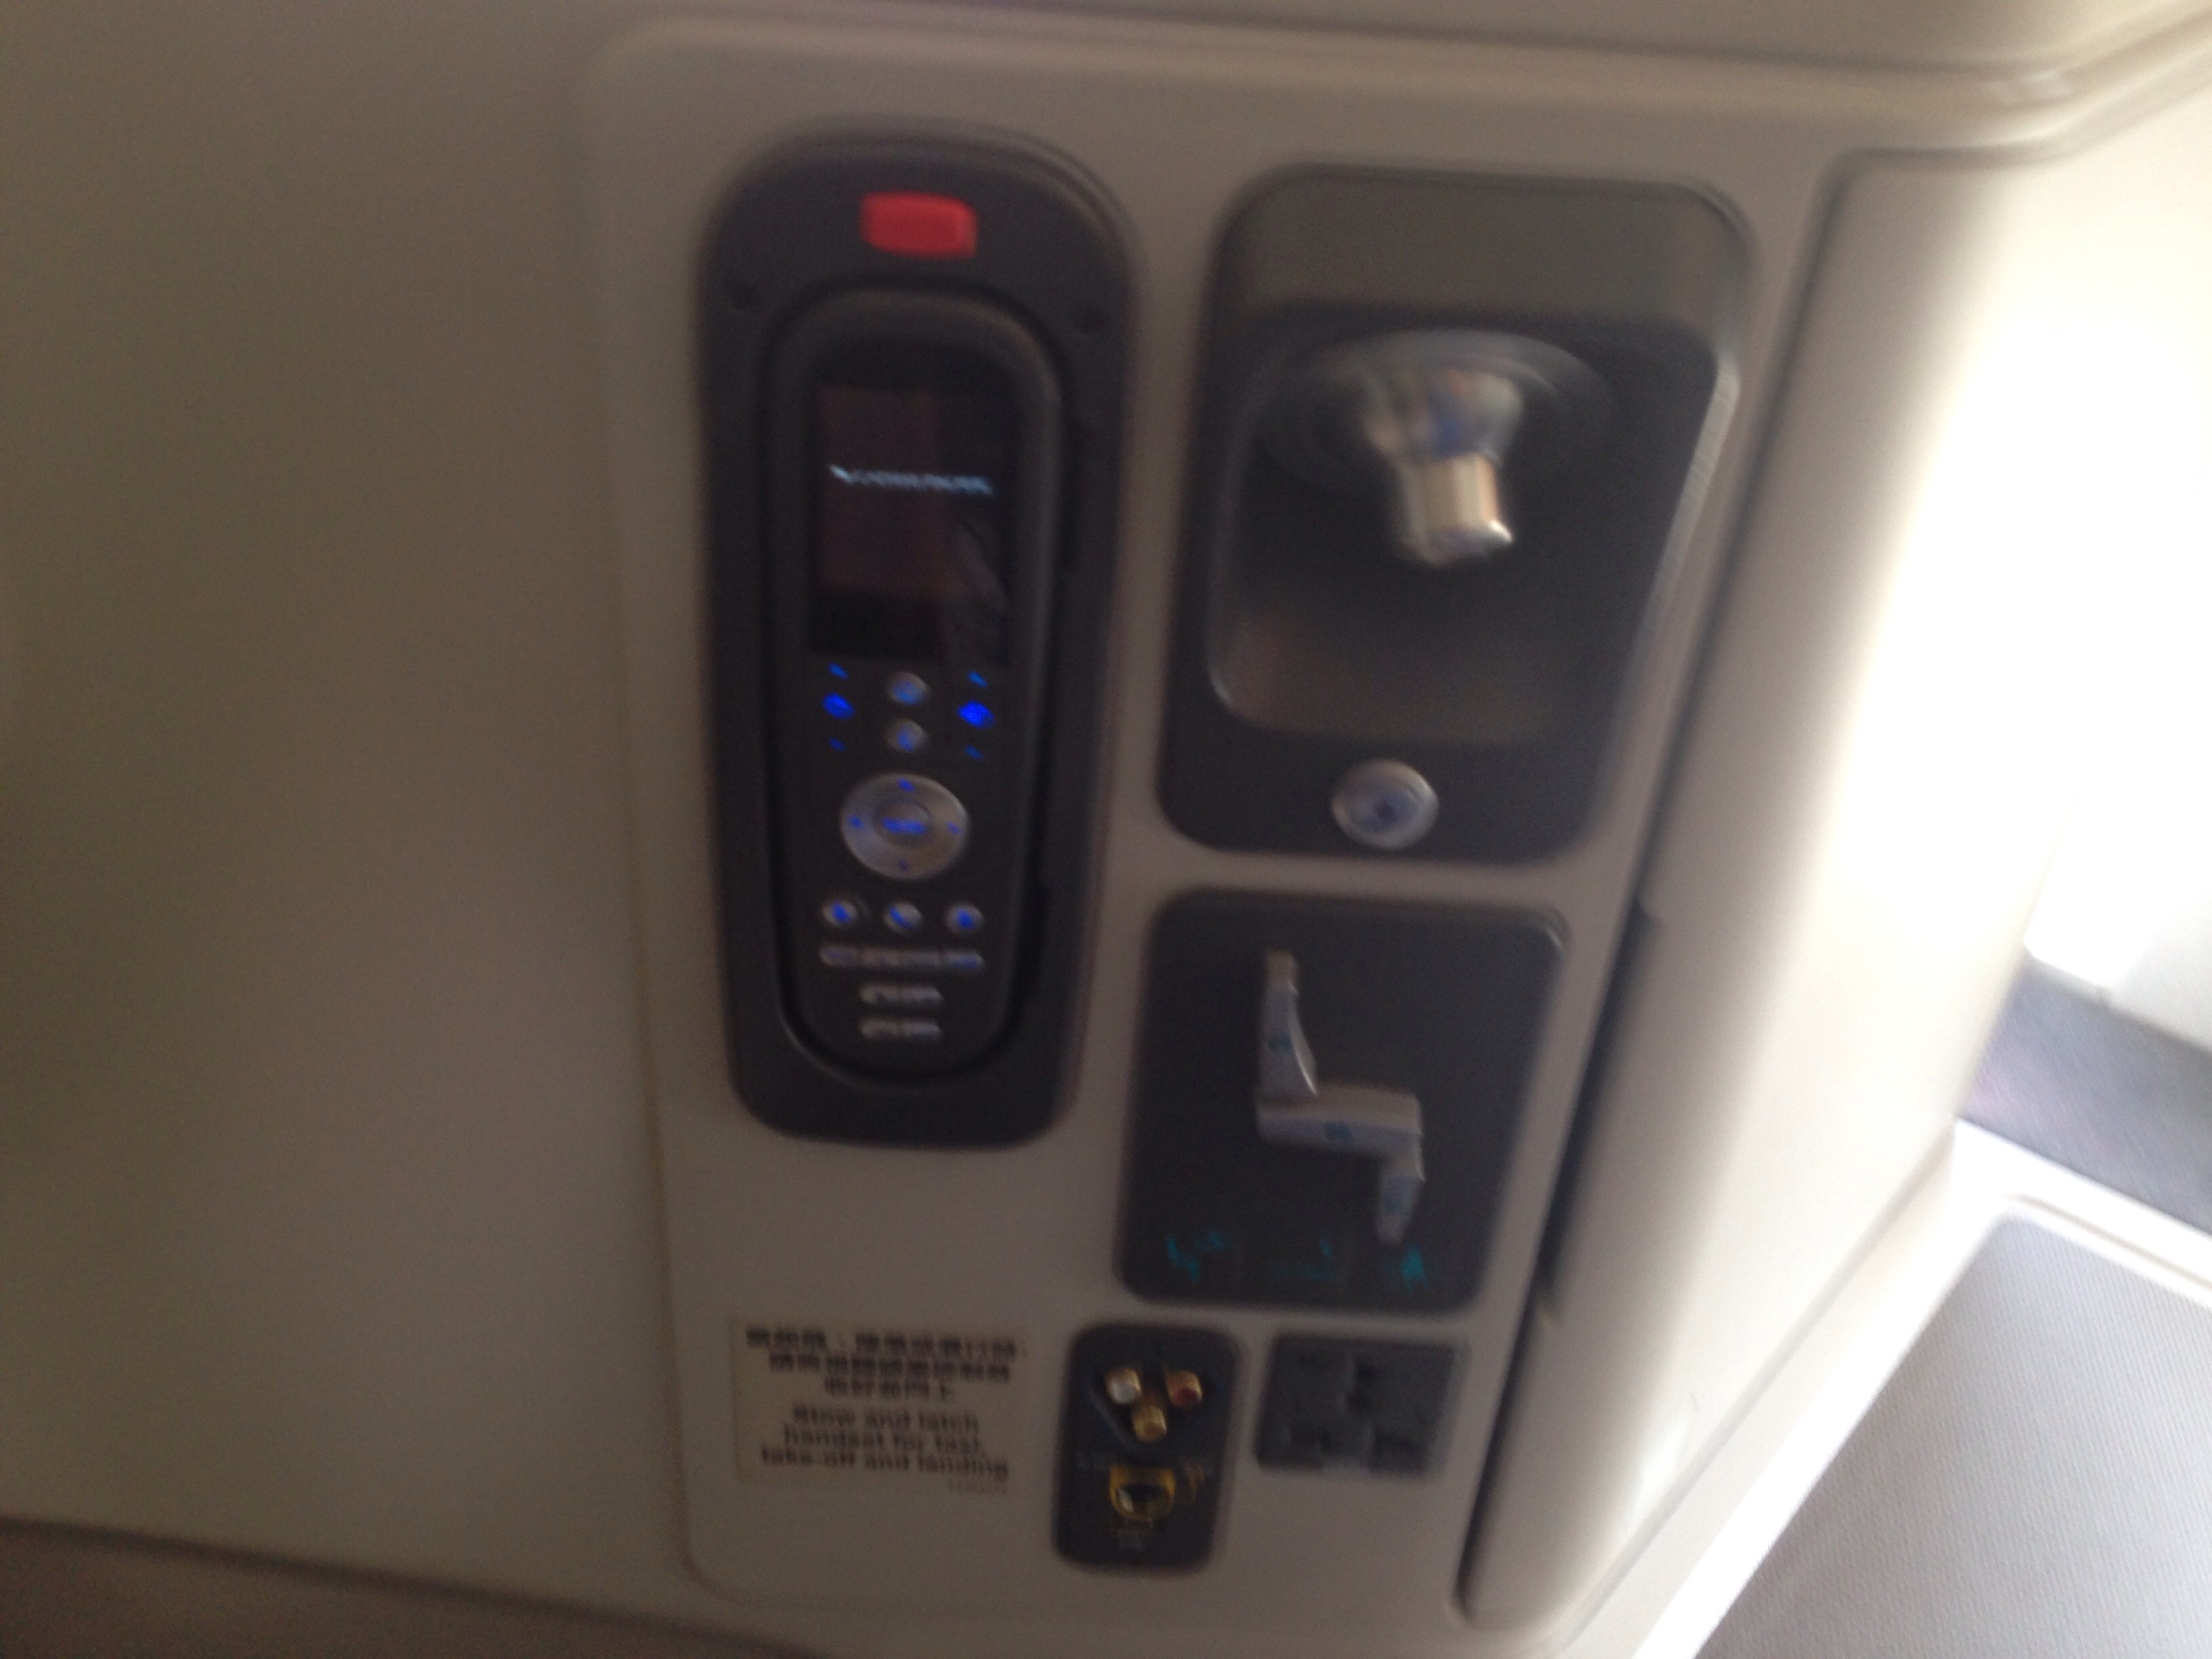 a device on a plane